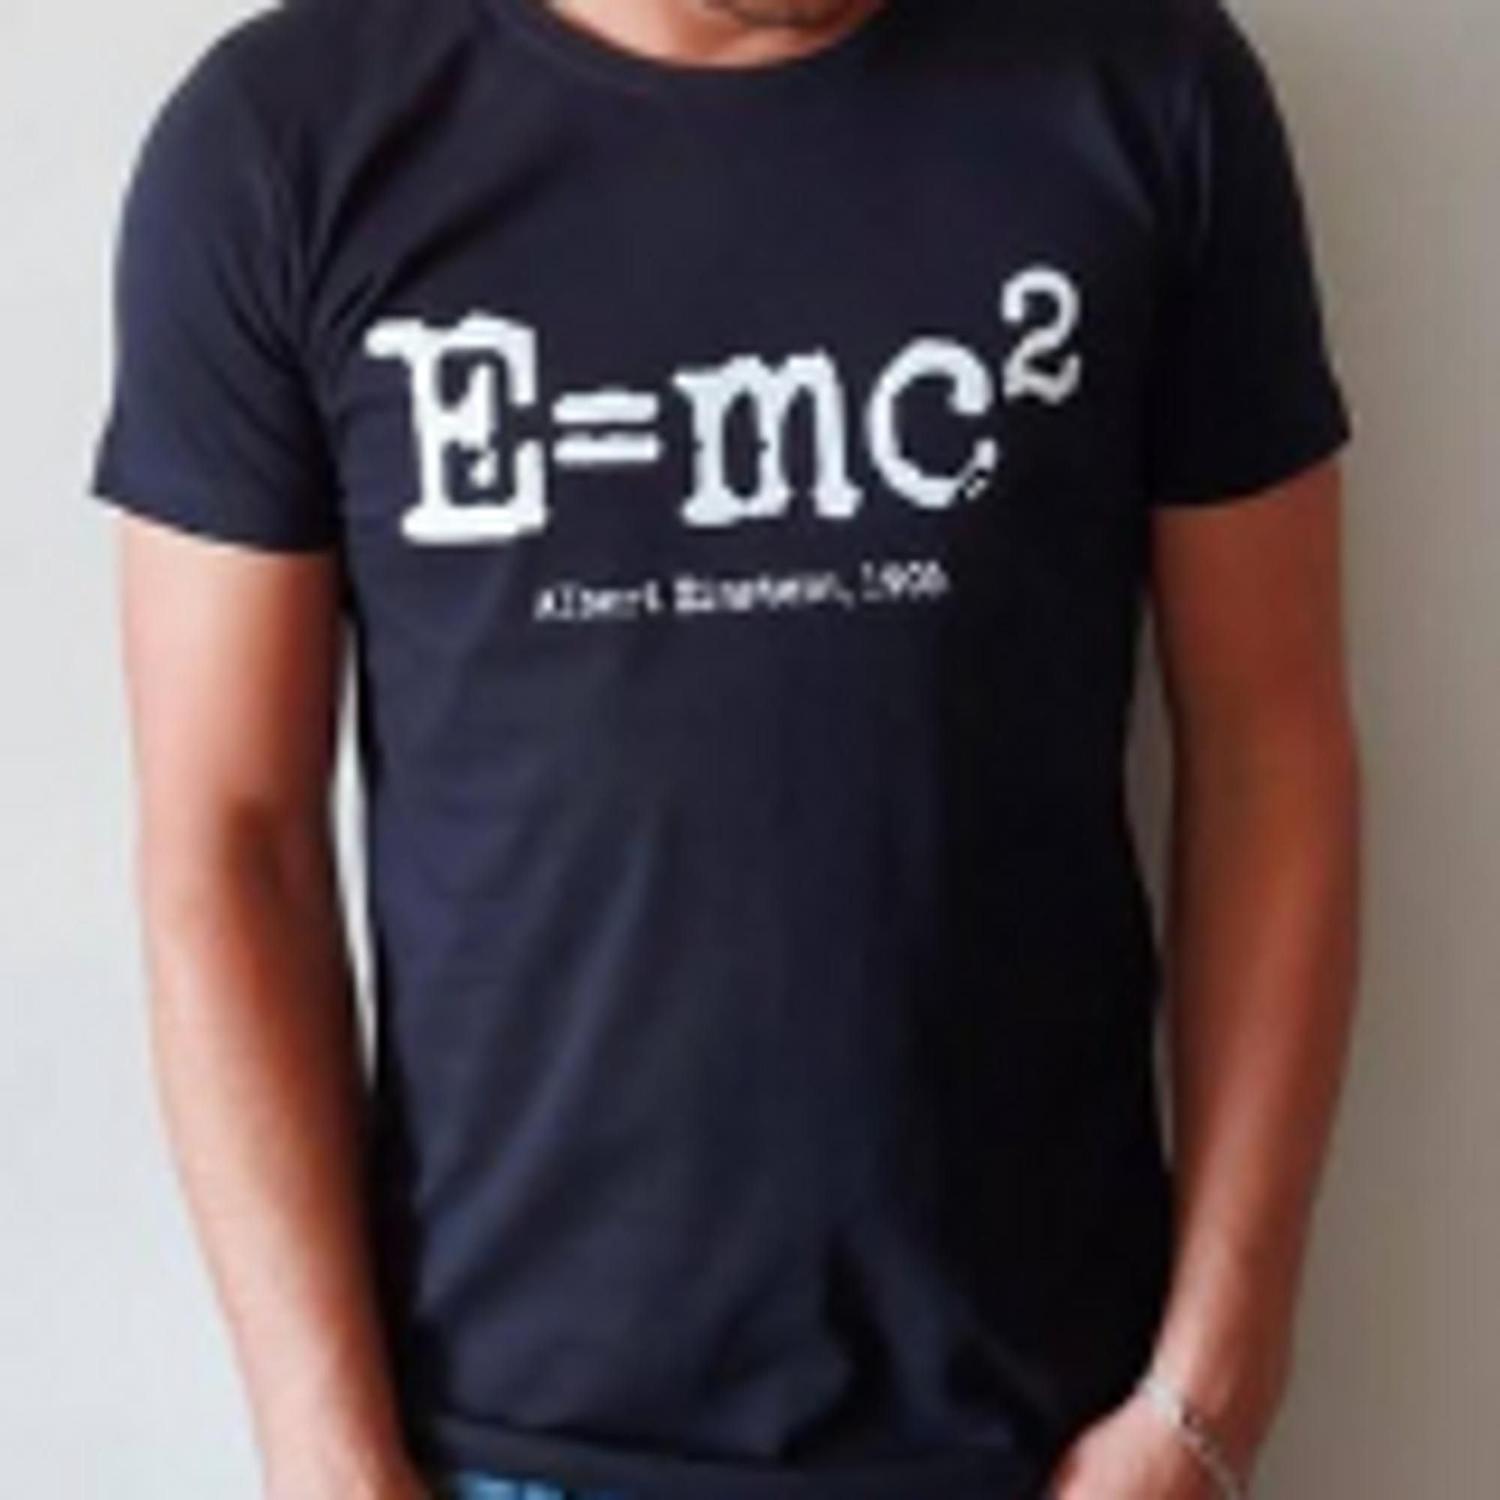 Camiseta Masculina Estampa E=MC² (Albert Einstein).Marca Sheth, Modelo  Básica, cor Preta,Tamanho P - Sheth Camisetas - Camiseta Masculina -  Magazine Luiza